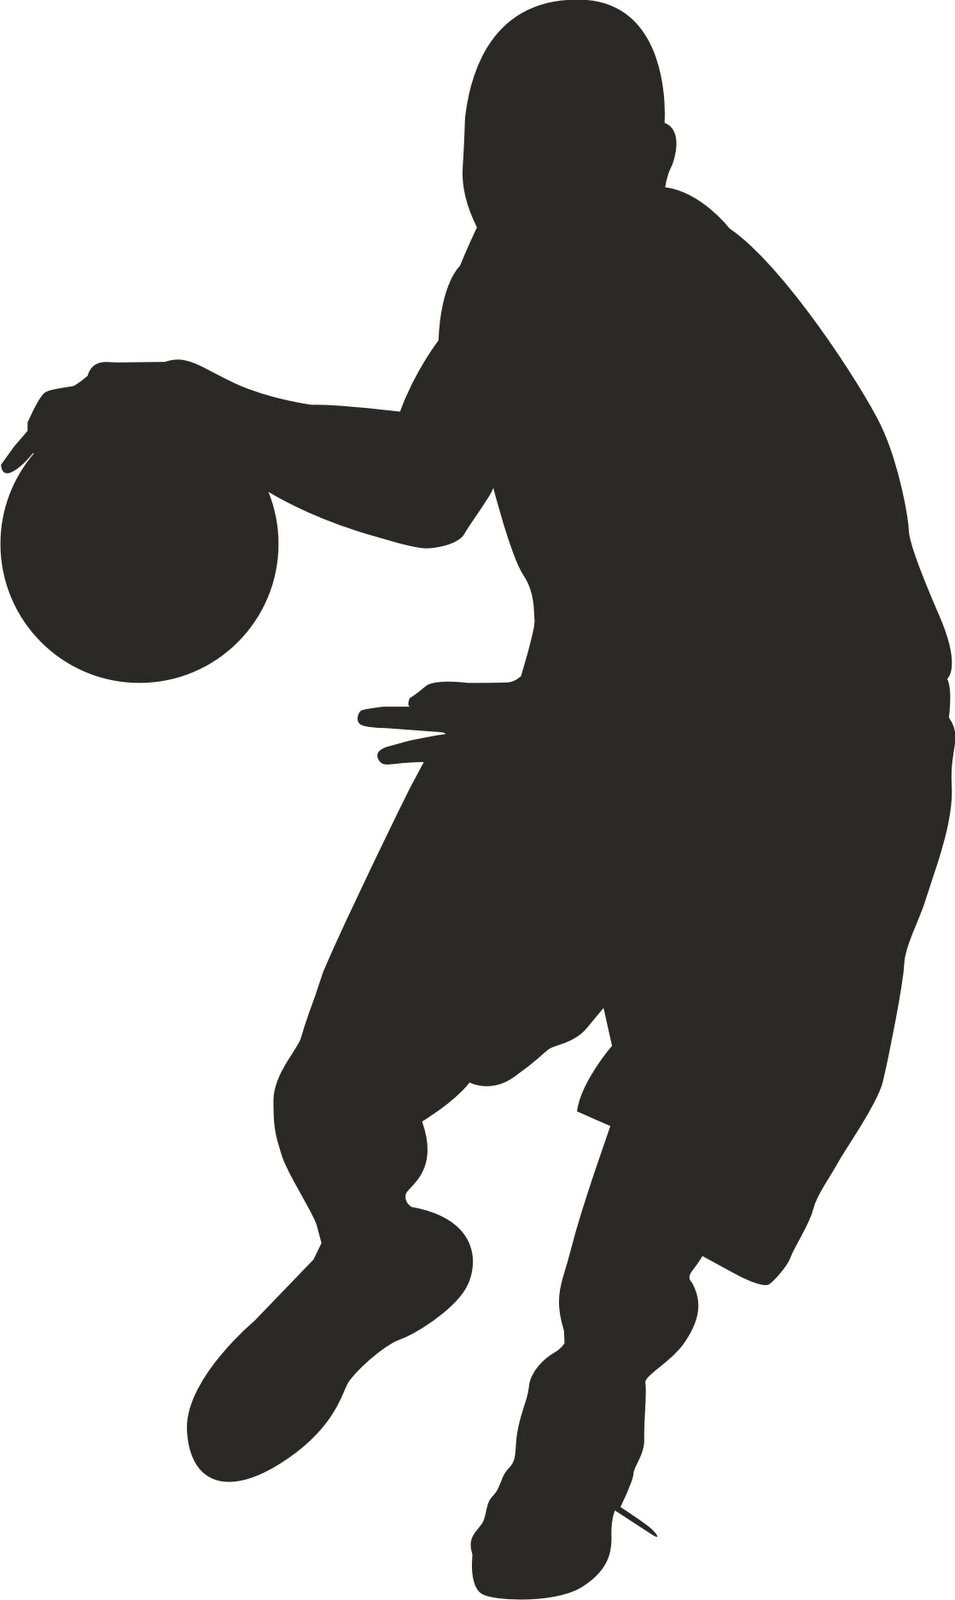 Clip Art Basketball Blocked Shots | Clipart library - Free Clipart 